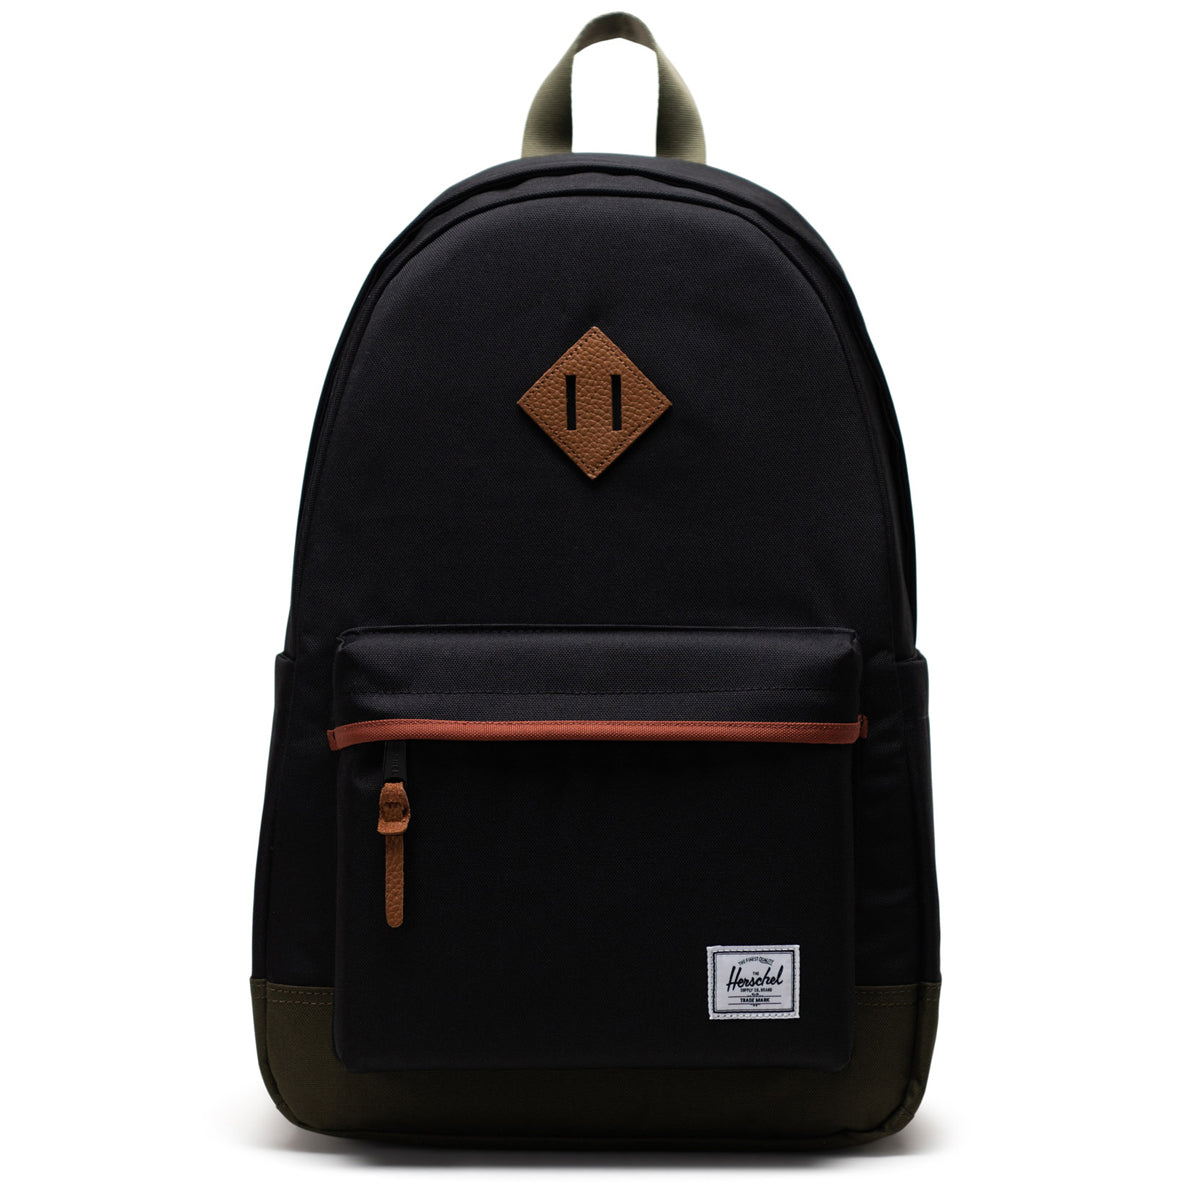 Herschel Supply Heritage Backpack - Black/Ivy Green/Chutney image 1